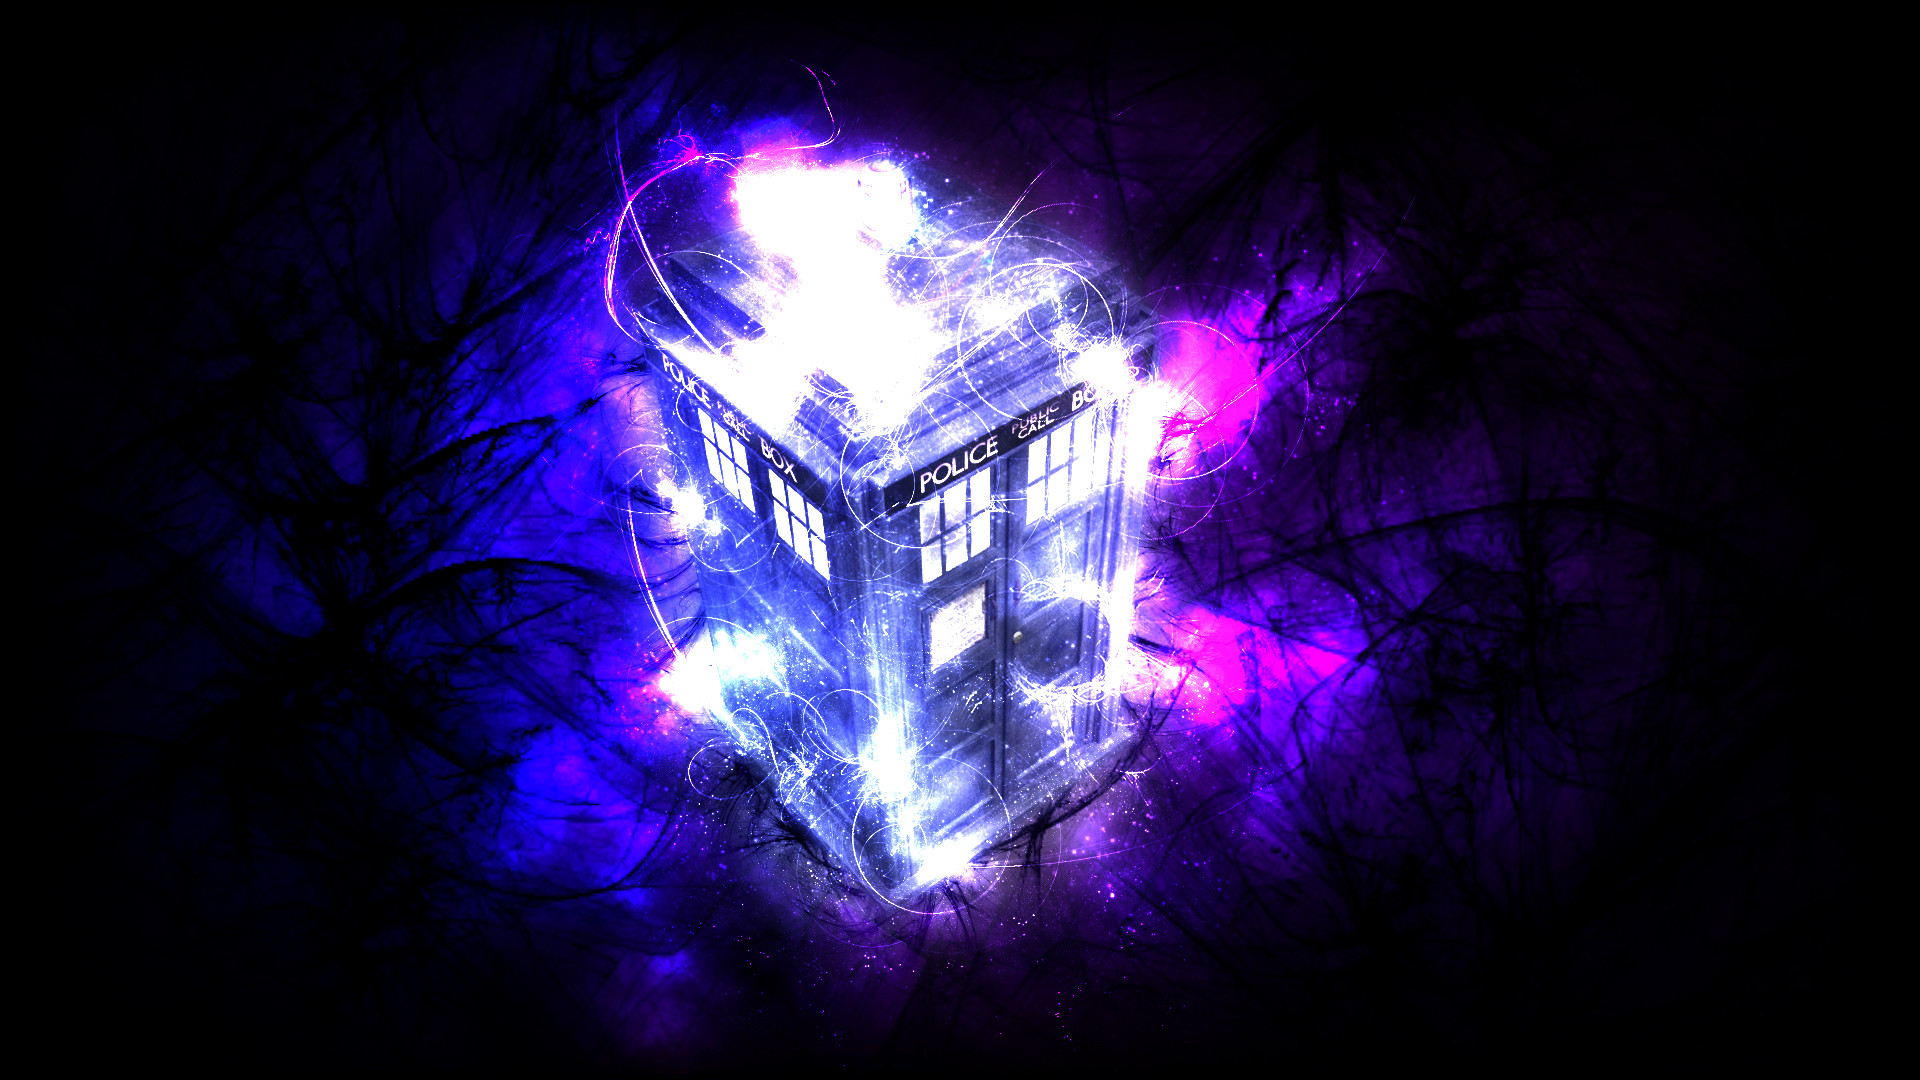 Doctor Who Tardis Matt Smith Desktop Hd Wallpaper CloudPix | HD Wallpapers  | Pinterest | Matt smith, Hd wallpaper and Wallpaper